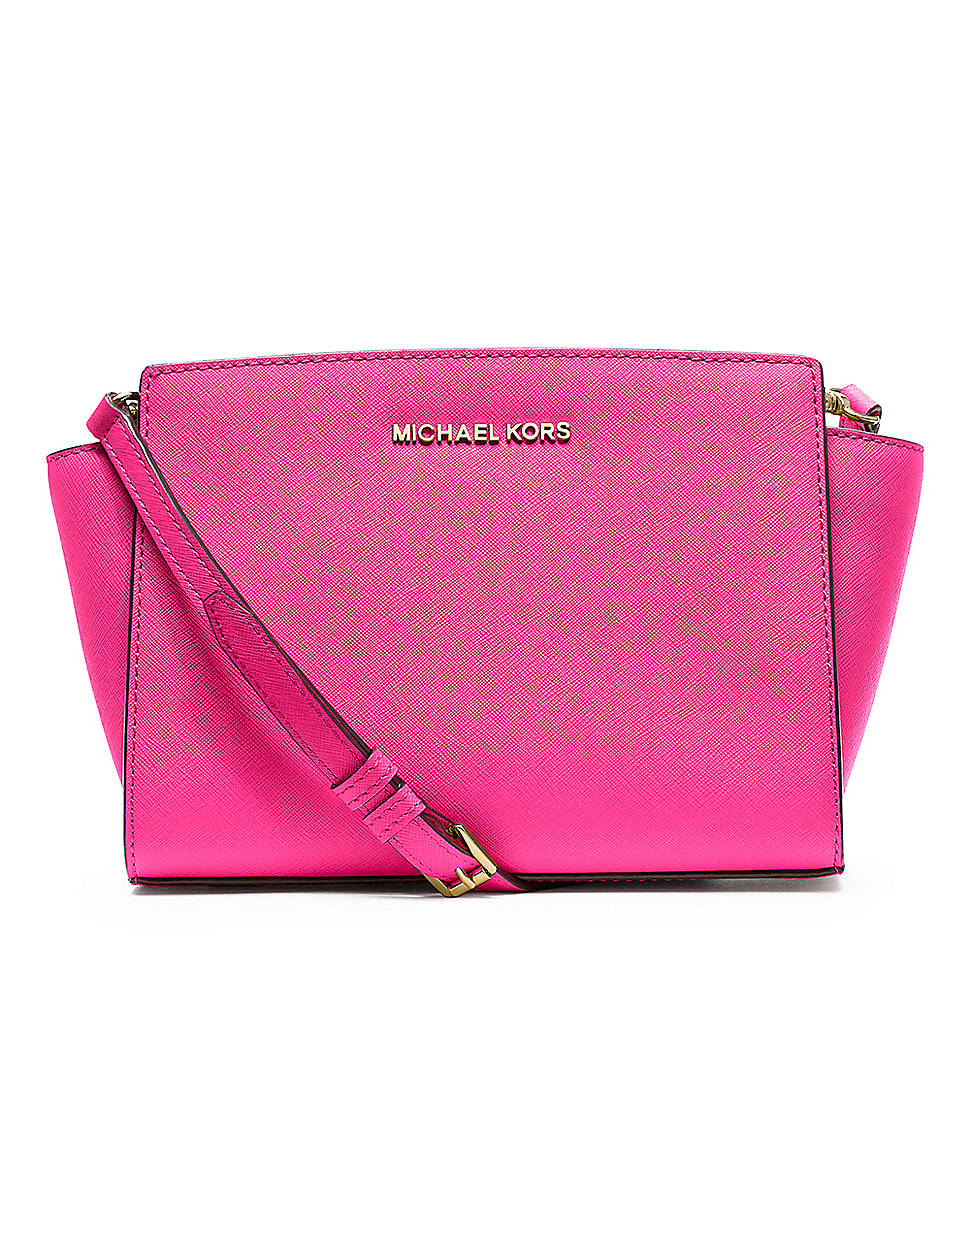 Michael Michael Kors Selma Leather Medium Messenger Bag in Pink (neon ...